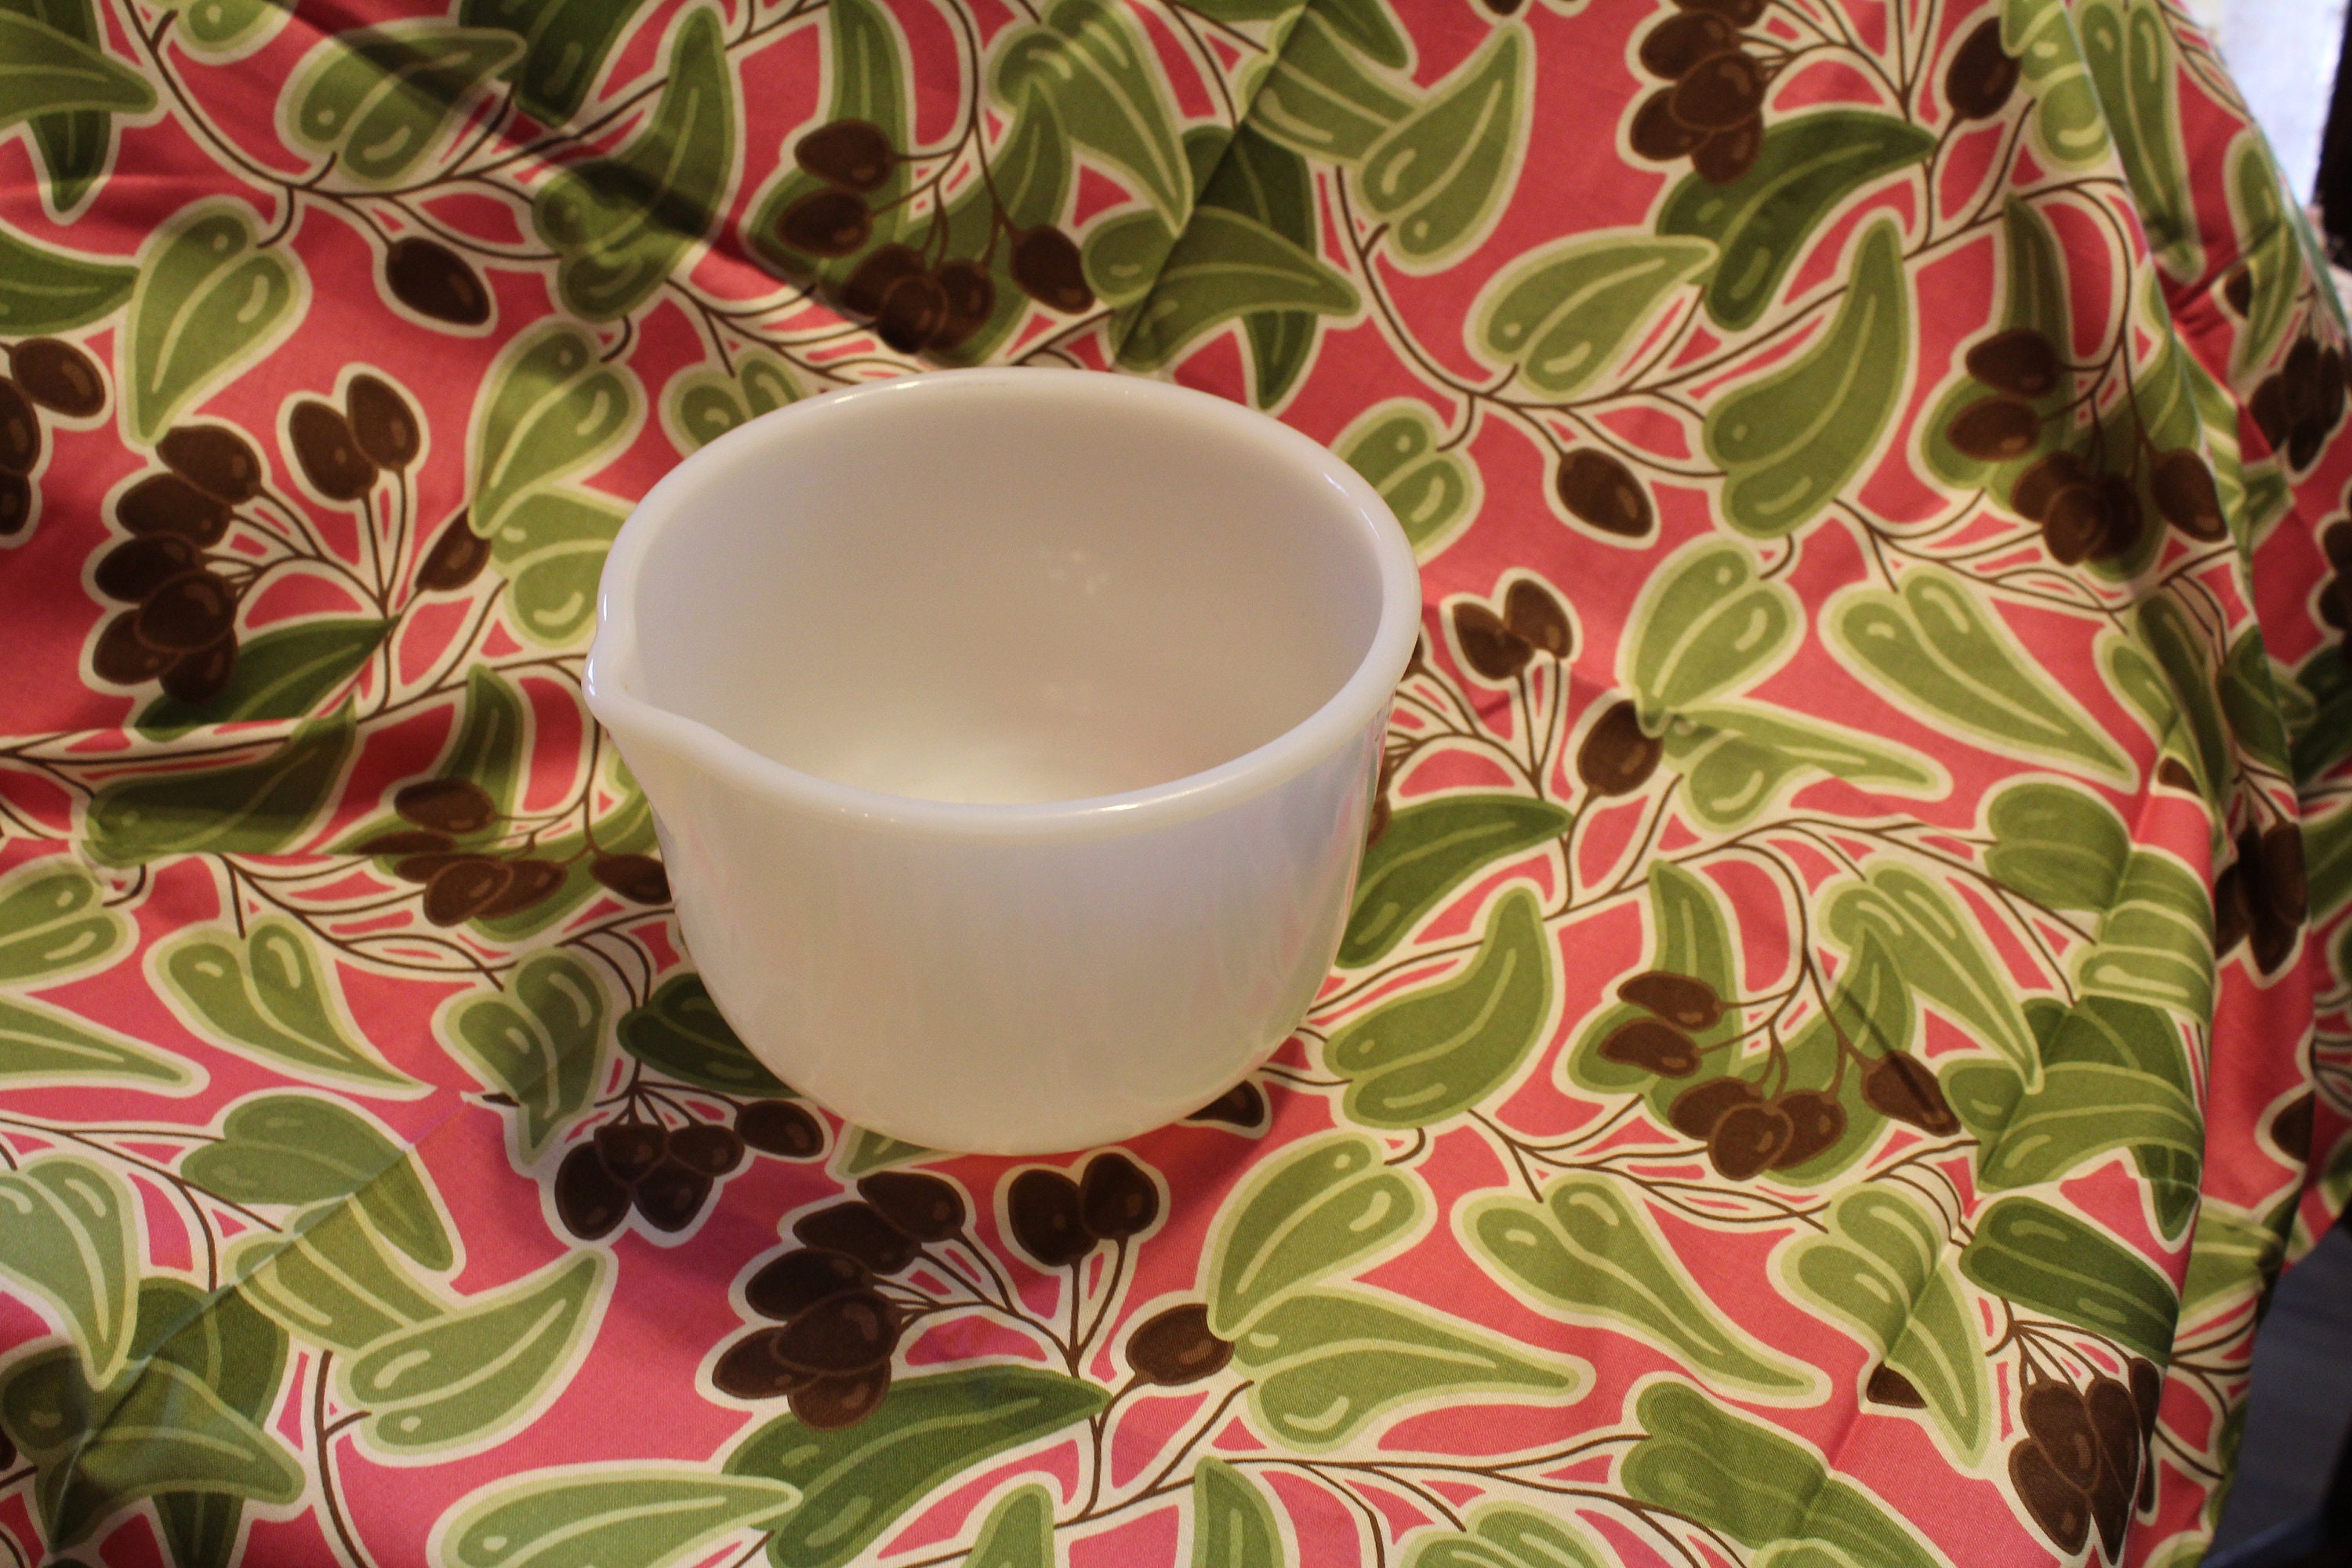 Glasbake Sunbeam Milk Glass Mixing Bowl Small 20 CJ Pour Spout Vintage